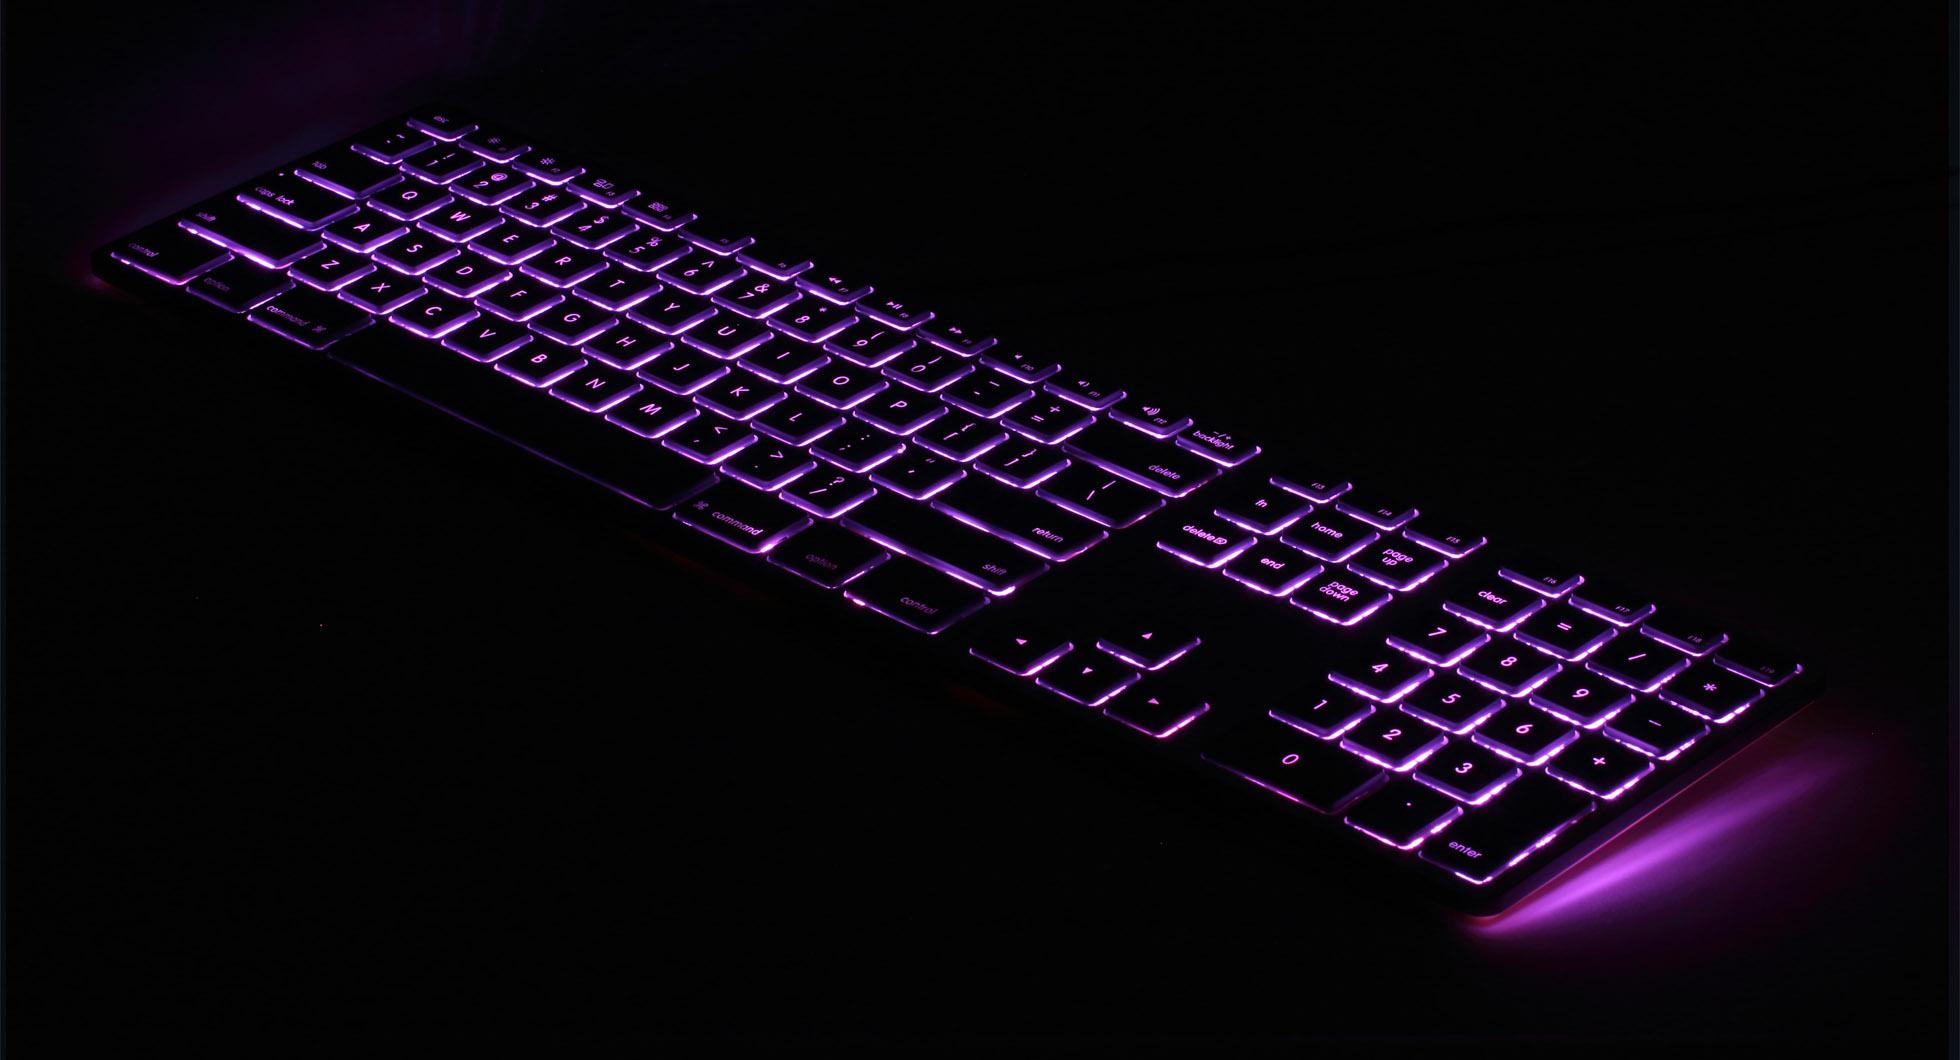 Matias aluminum keyboard with RGB backlight DE for PC - Black